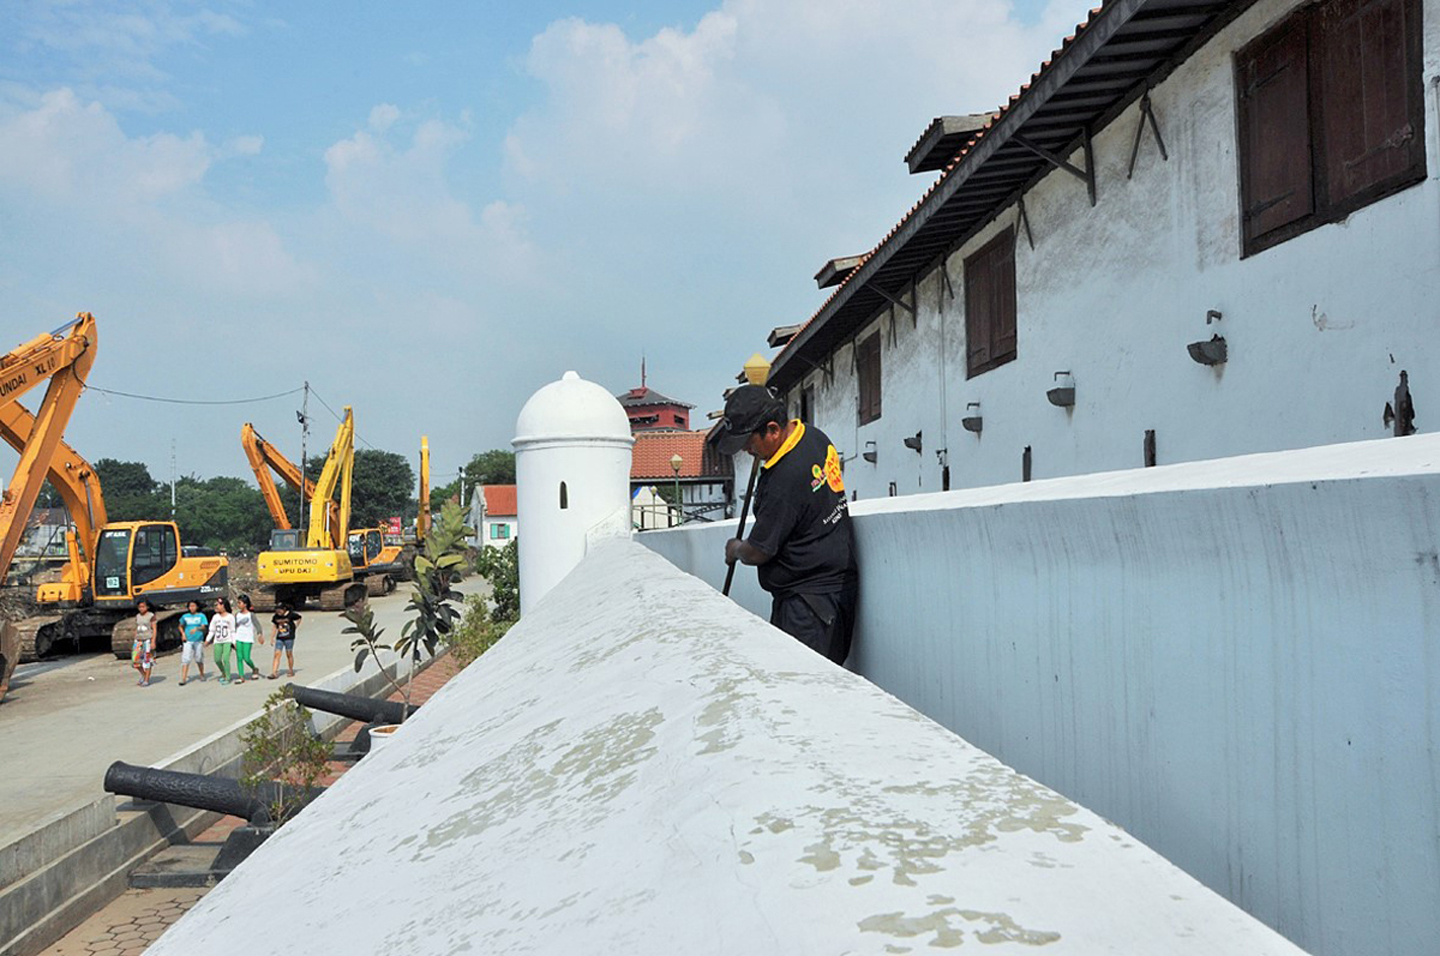 4 Museum Kelautan di Jakarta, Wisata Sembari Belajar Sejarah Maritim di Indonesia 1